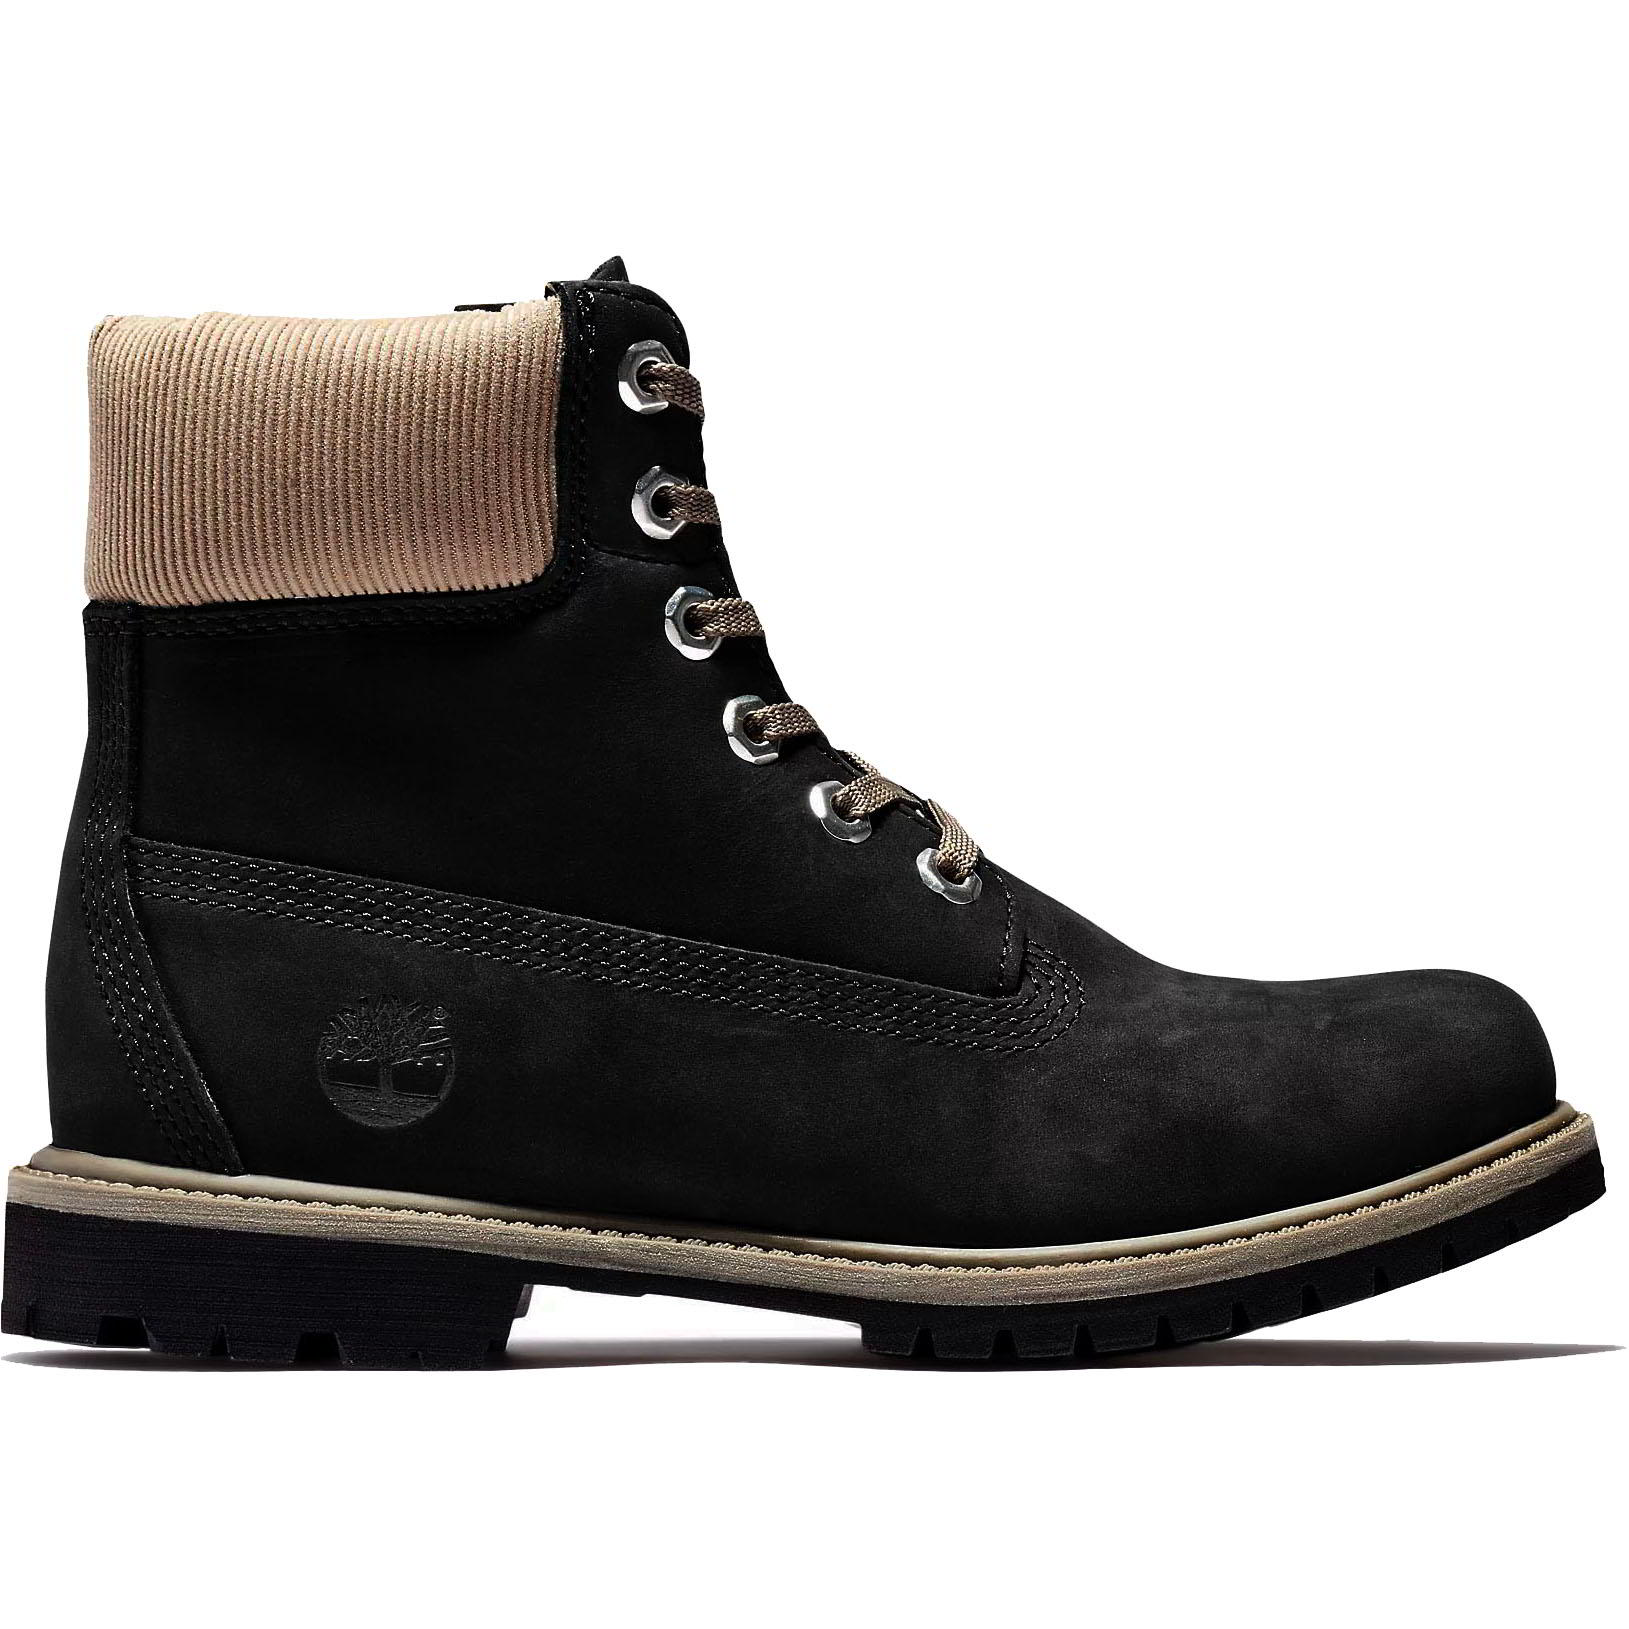 Timberland - Womens 6 Inch Premium Waterproof Ankle Boots UK 4.5 Black 2951